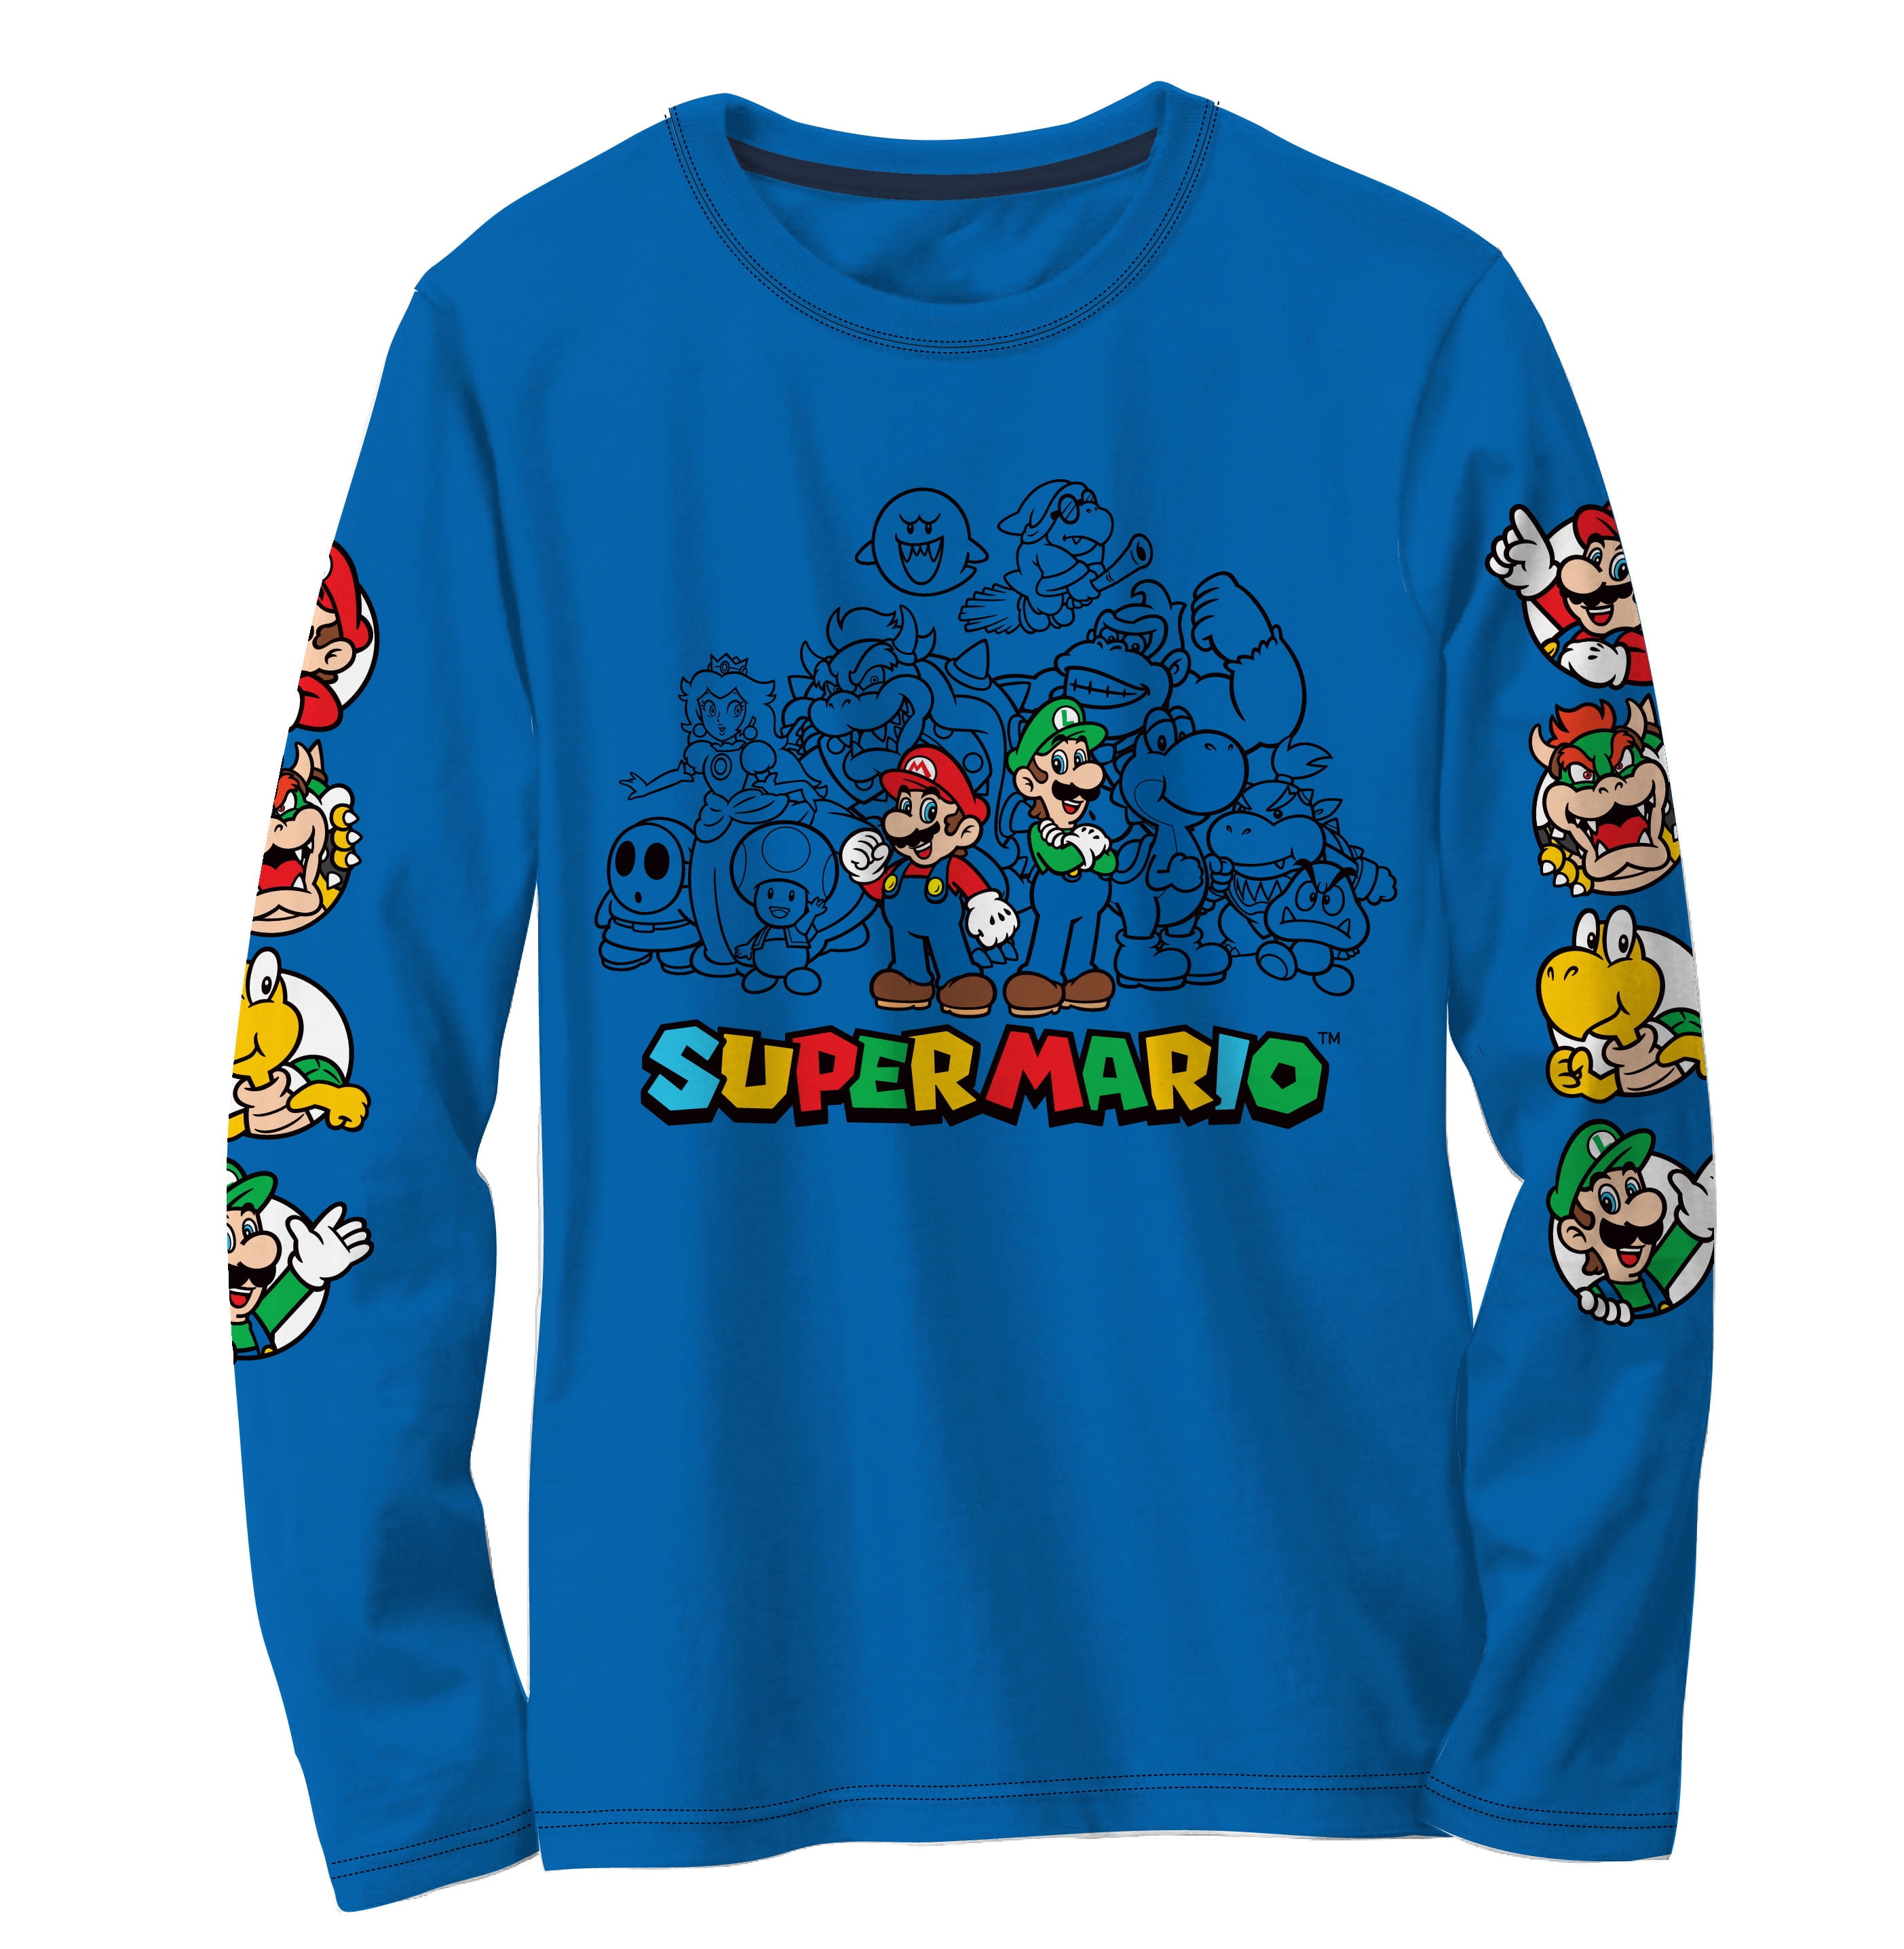 Super Mario Long Sleeve T Shirt with Yoshi Mario Luigi for Boys Teenagers 